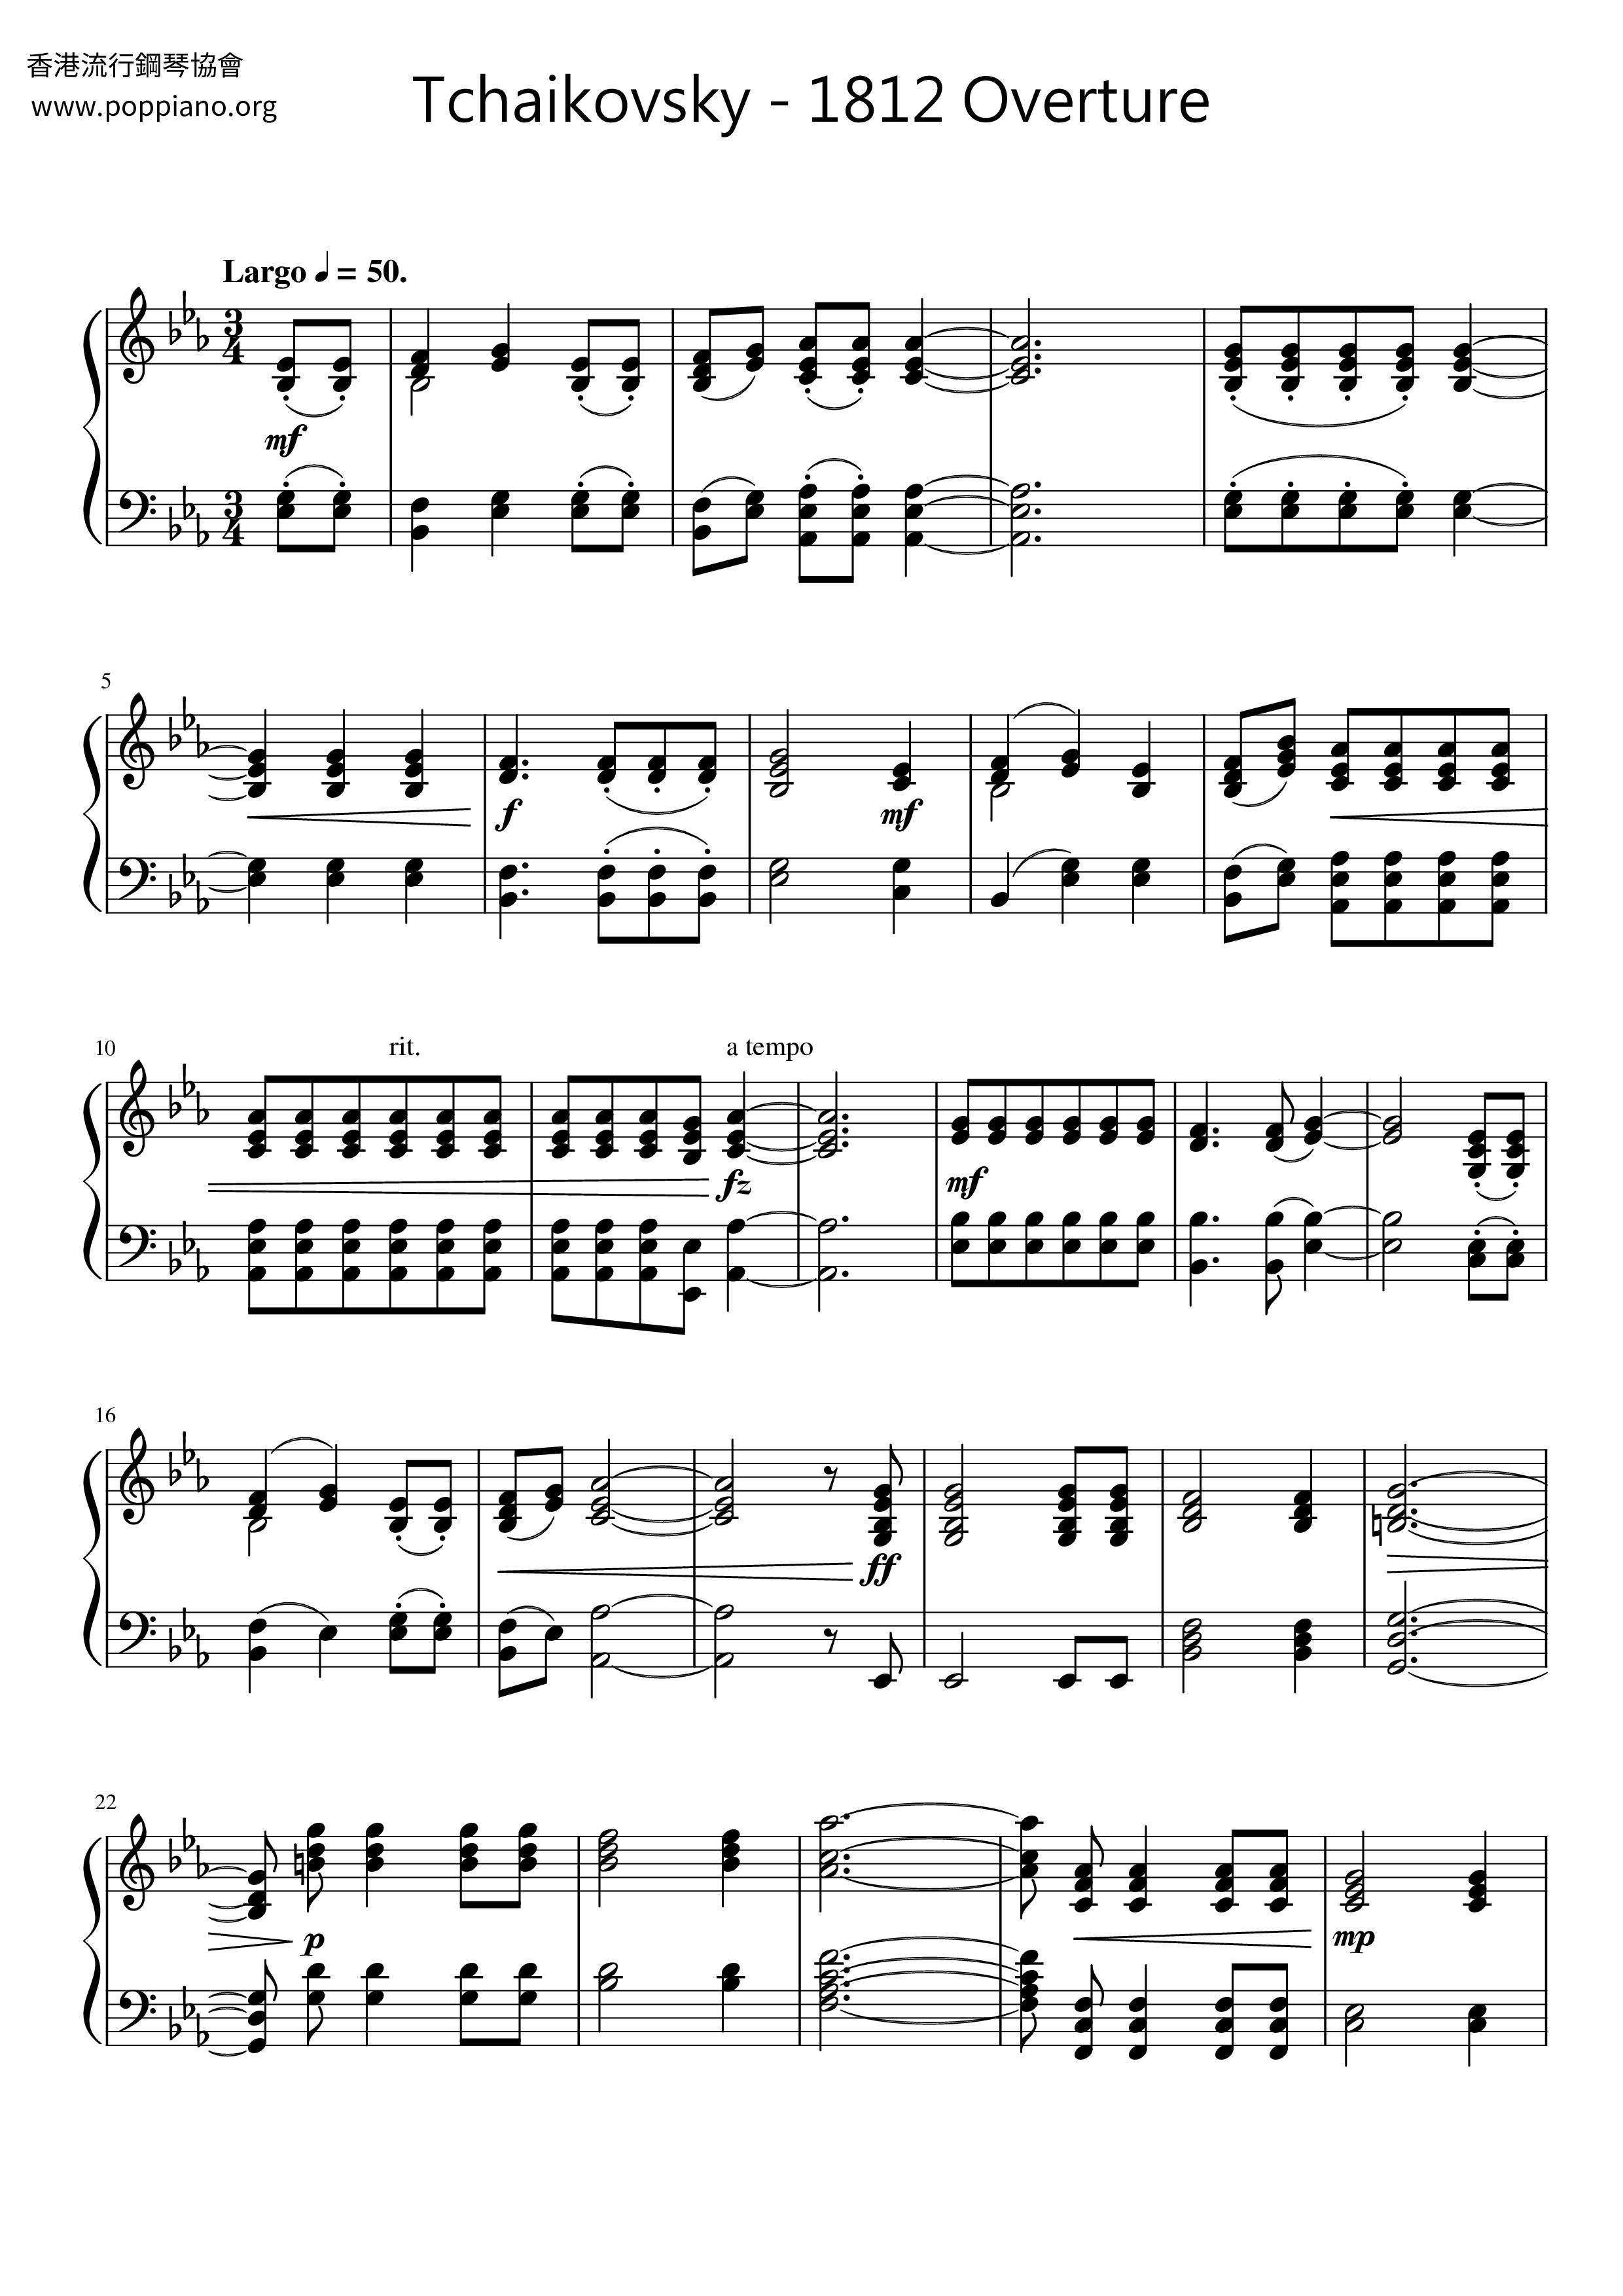 1812 Overture Score